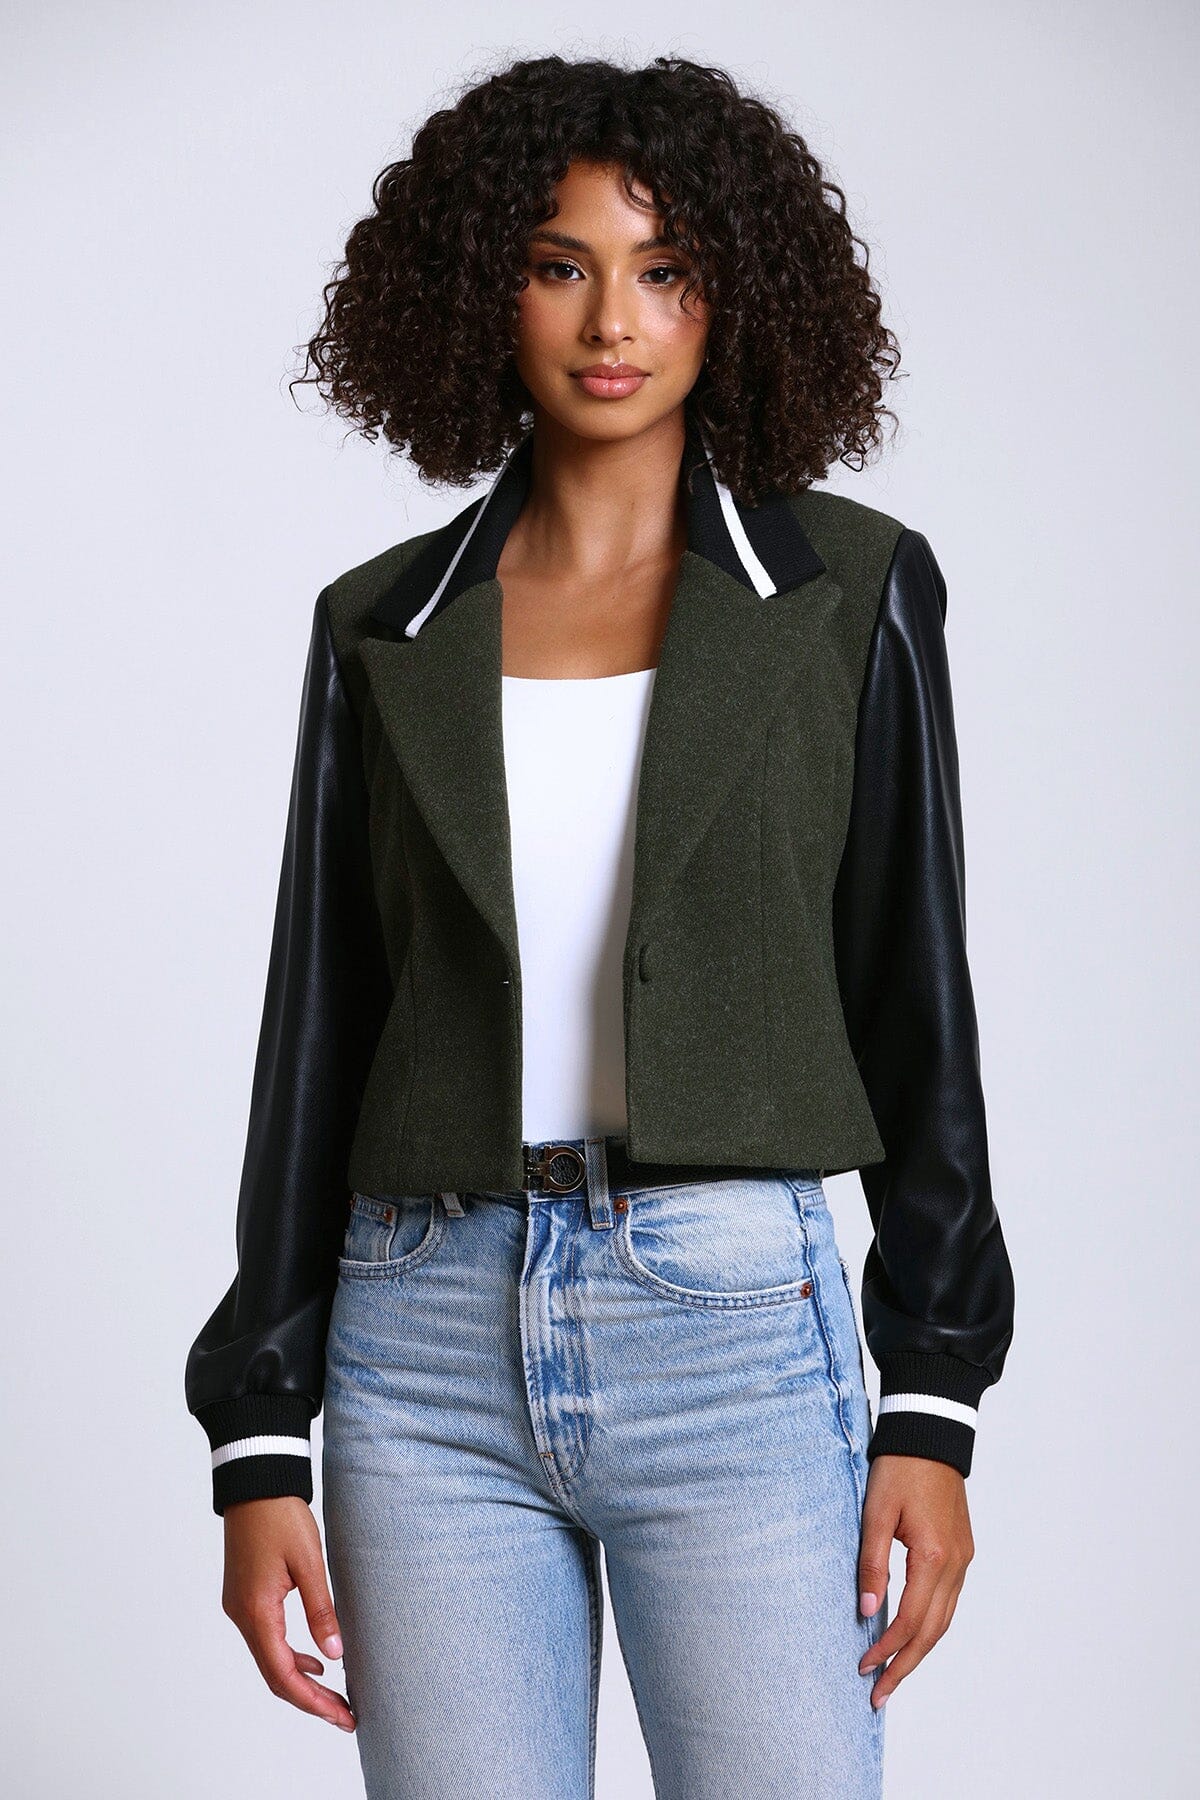 mixed media cropped varsity blazer jacket coat olive green and black - figure flattering designer fashion work appropriate coats jackets blazers for women